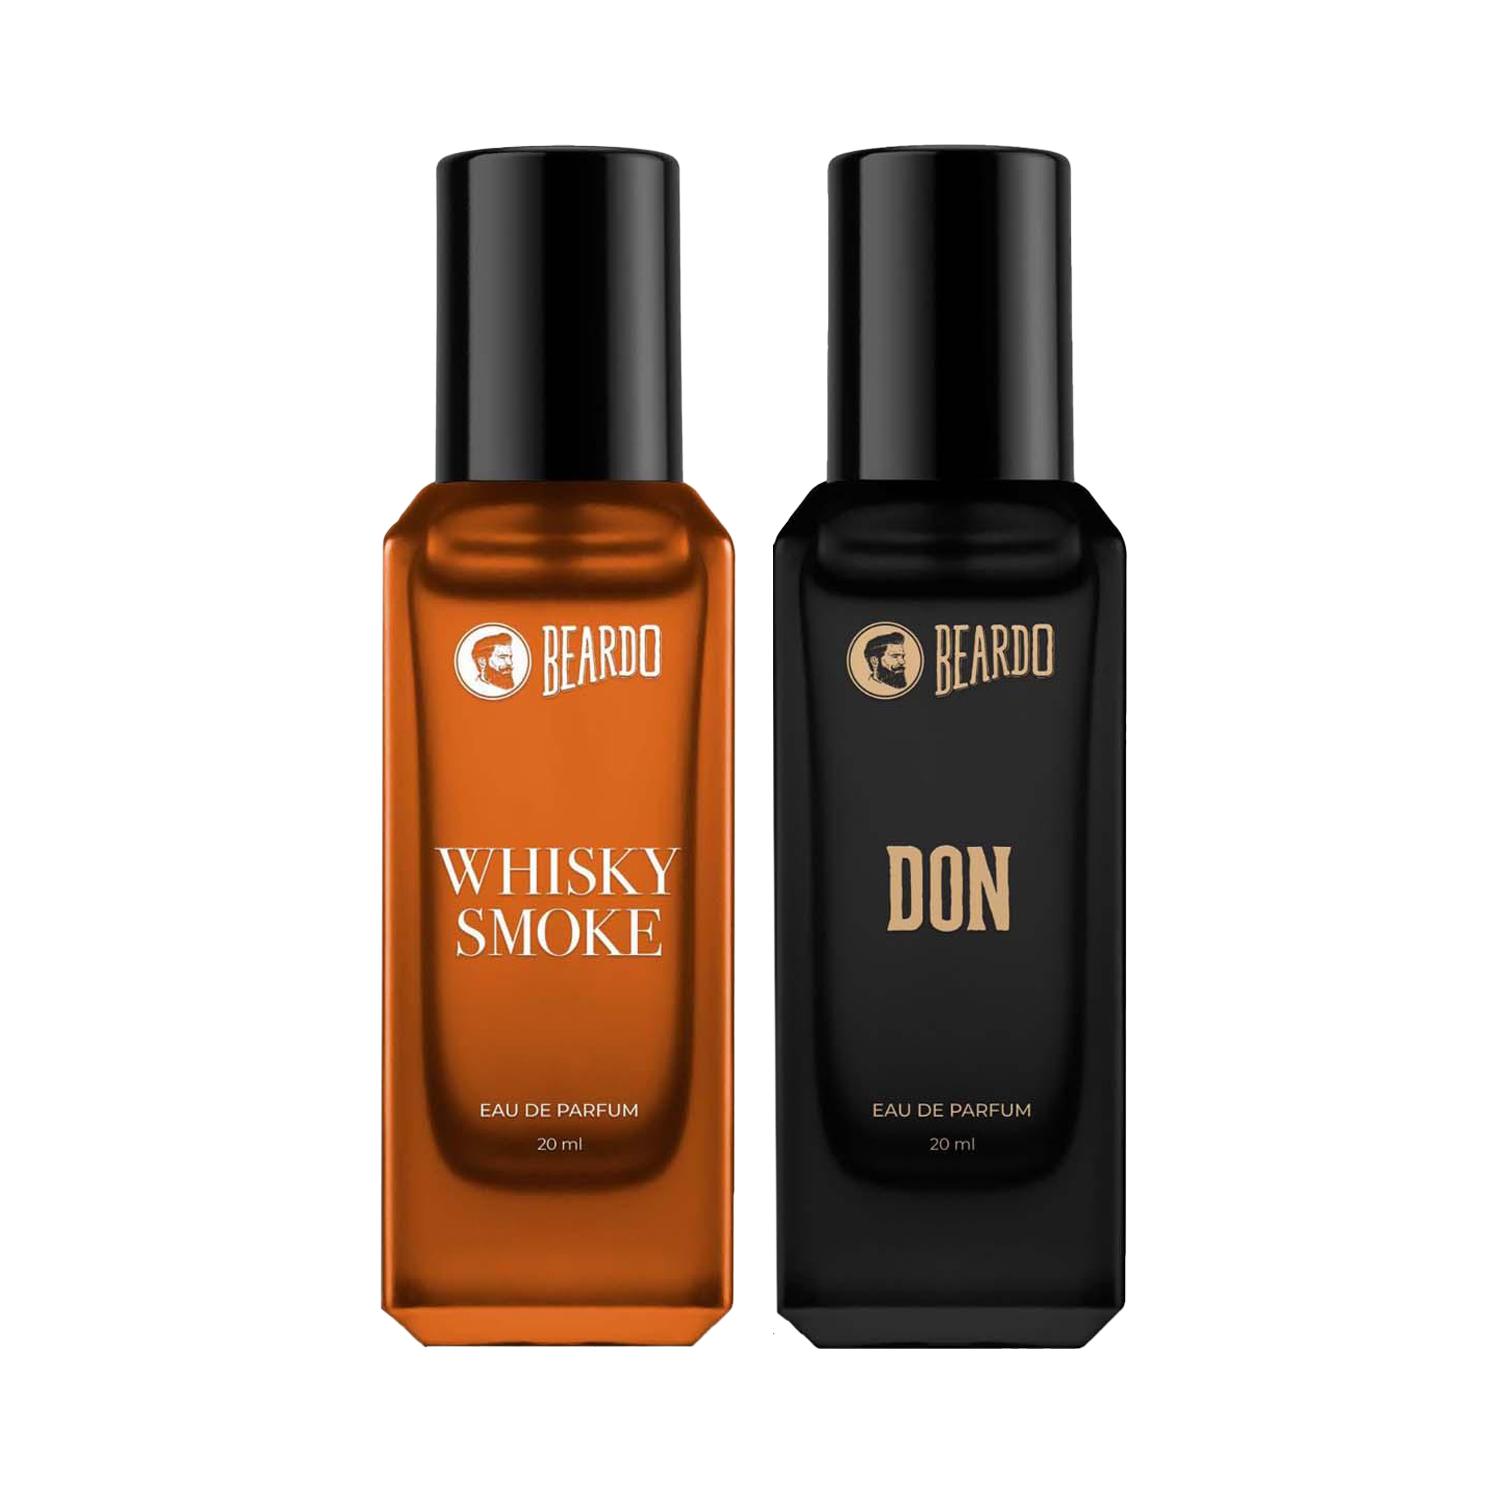 Beardo | Beardo Whisky Smoke Perfume & Don Perfume for Men, Strong Long Lasting Mens Perfume Gift Combo